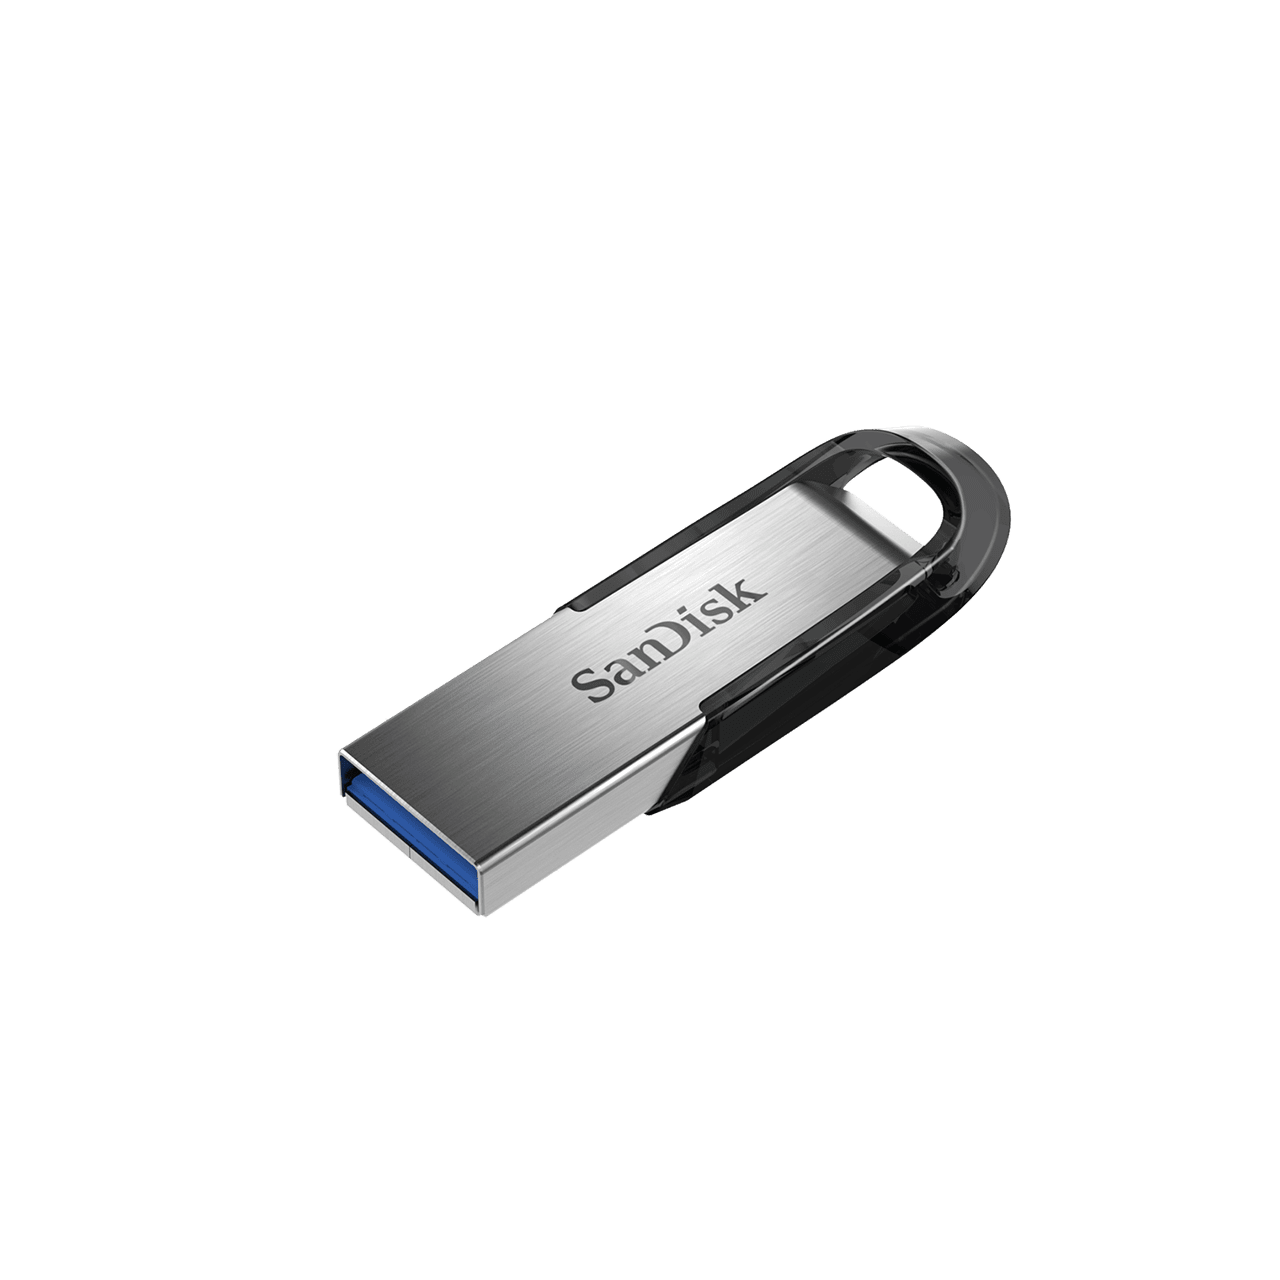 SANDISK FLAIR USB 3.0 FLASH DRIVE (16GB)